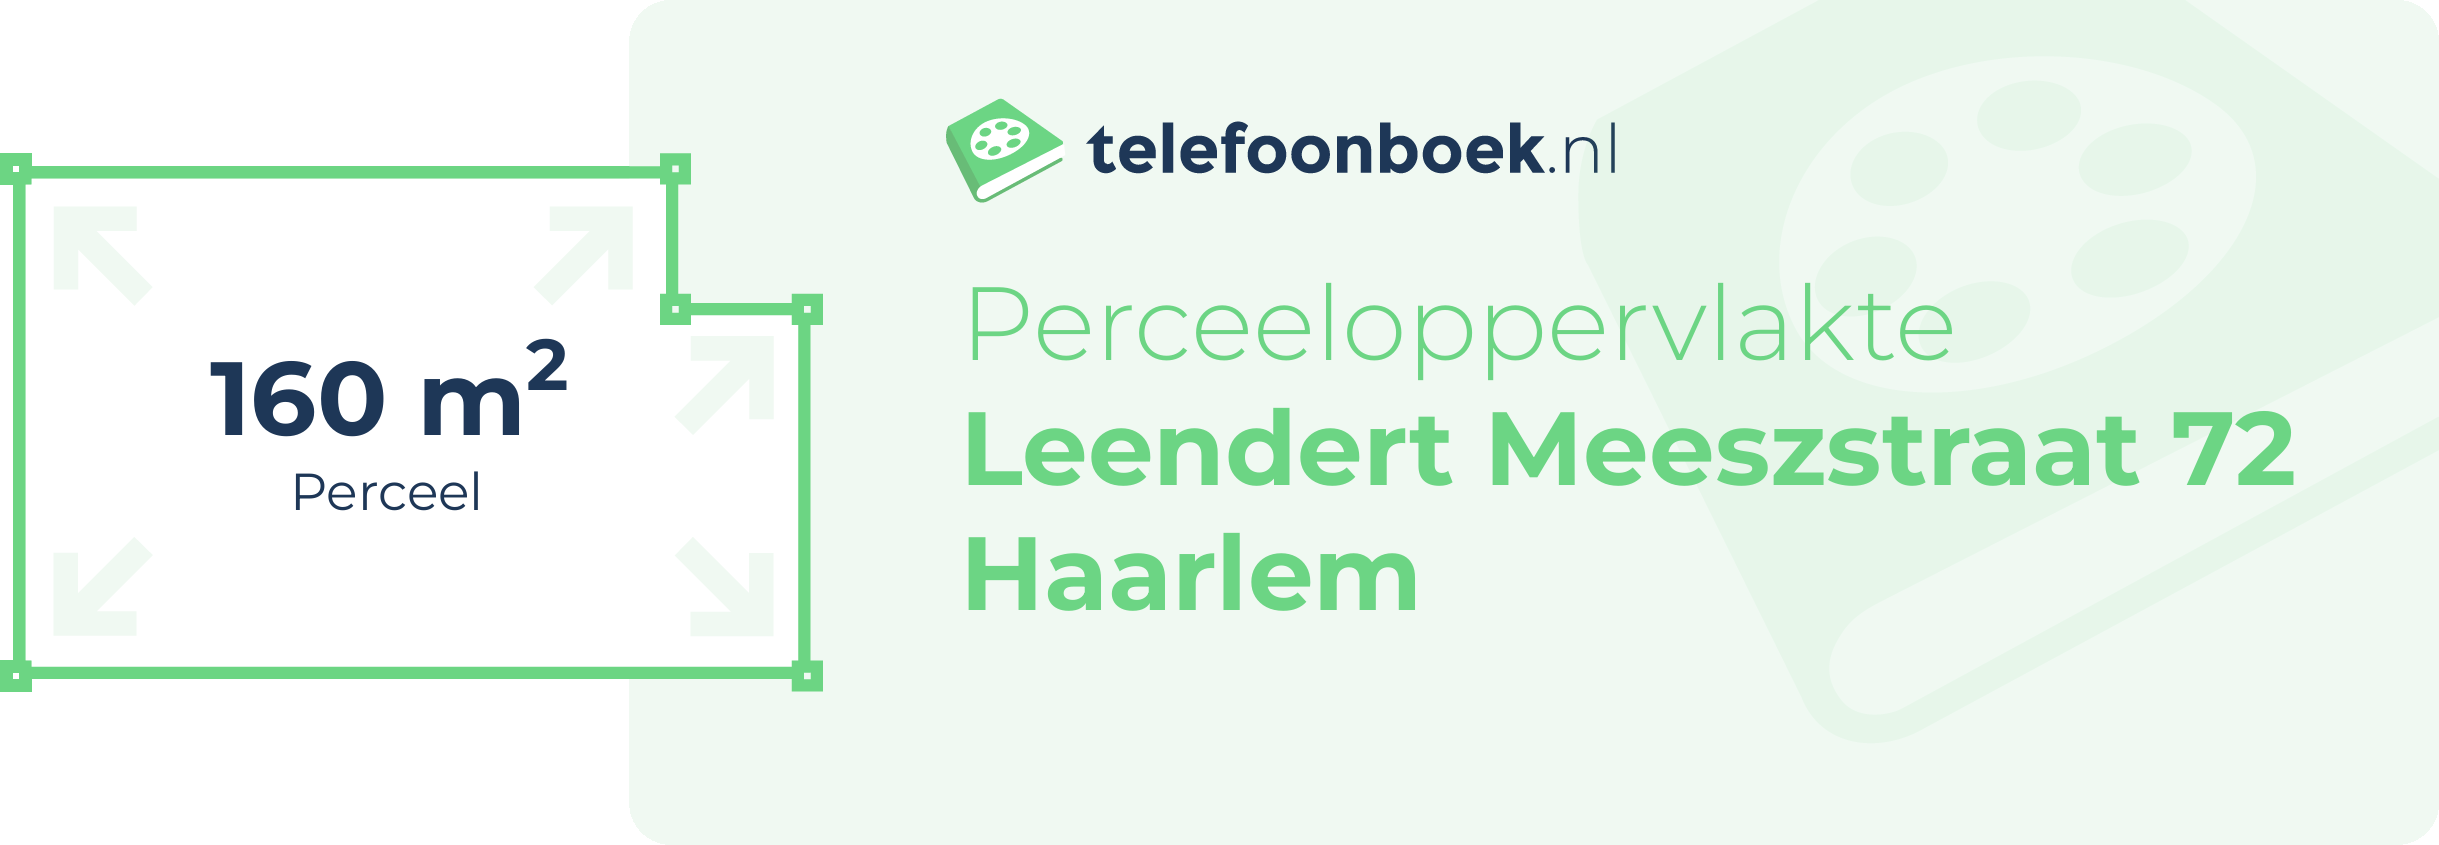 Perceeloppervlakte Leendert Meeszstraat 72 Haarlem